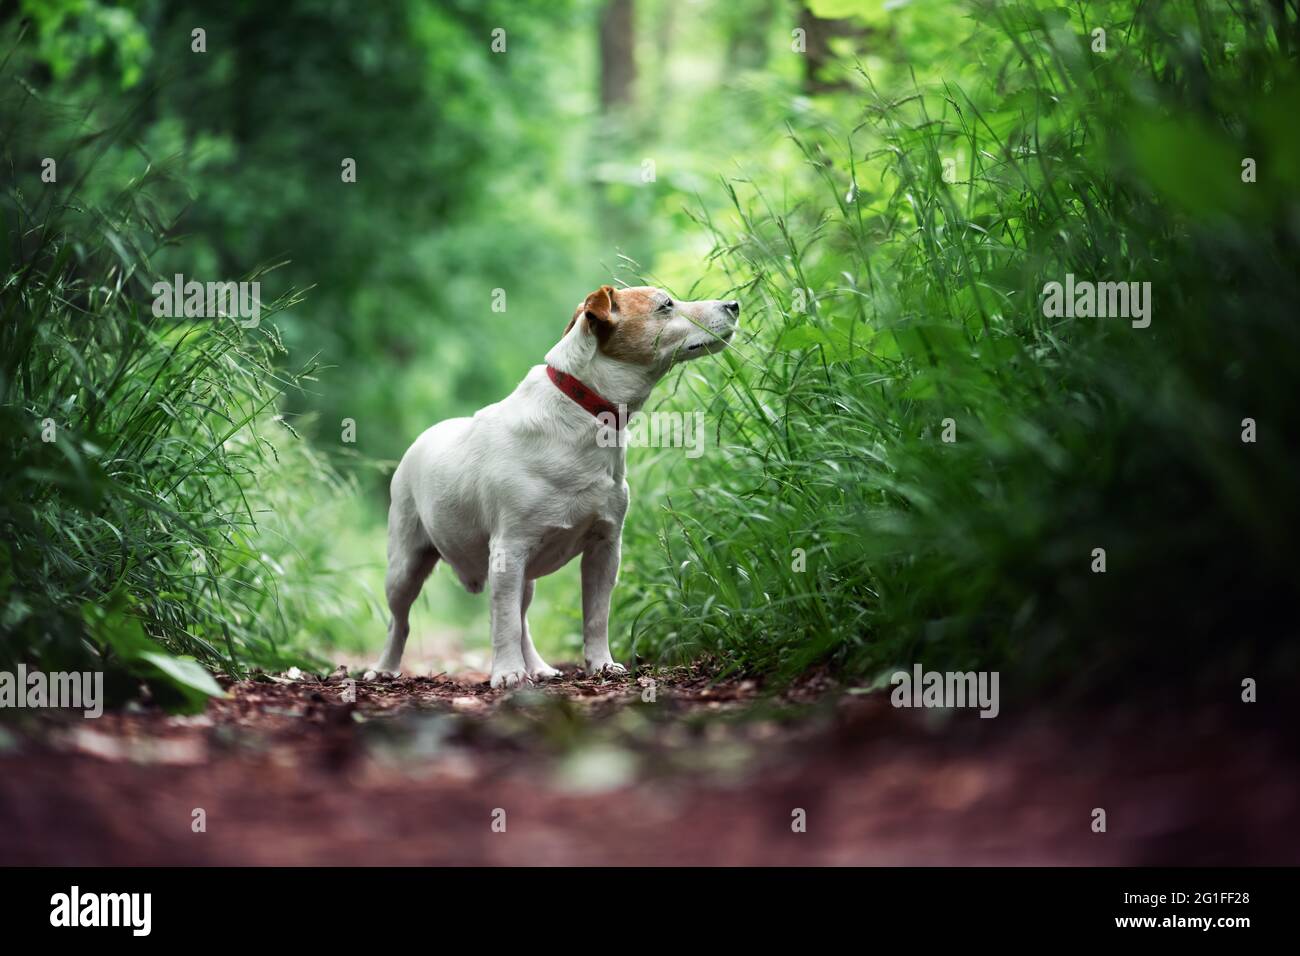 Jack russel Terrier Hund im grünen Frühlingswald mit üppigem Laub. Tier- und Naturfotografie Stockfoto